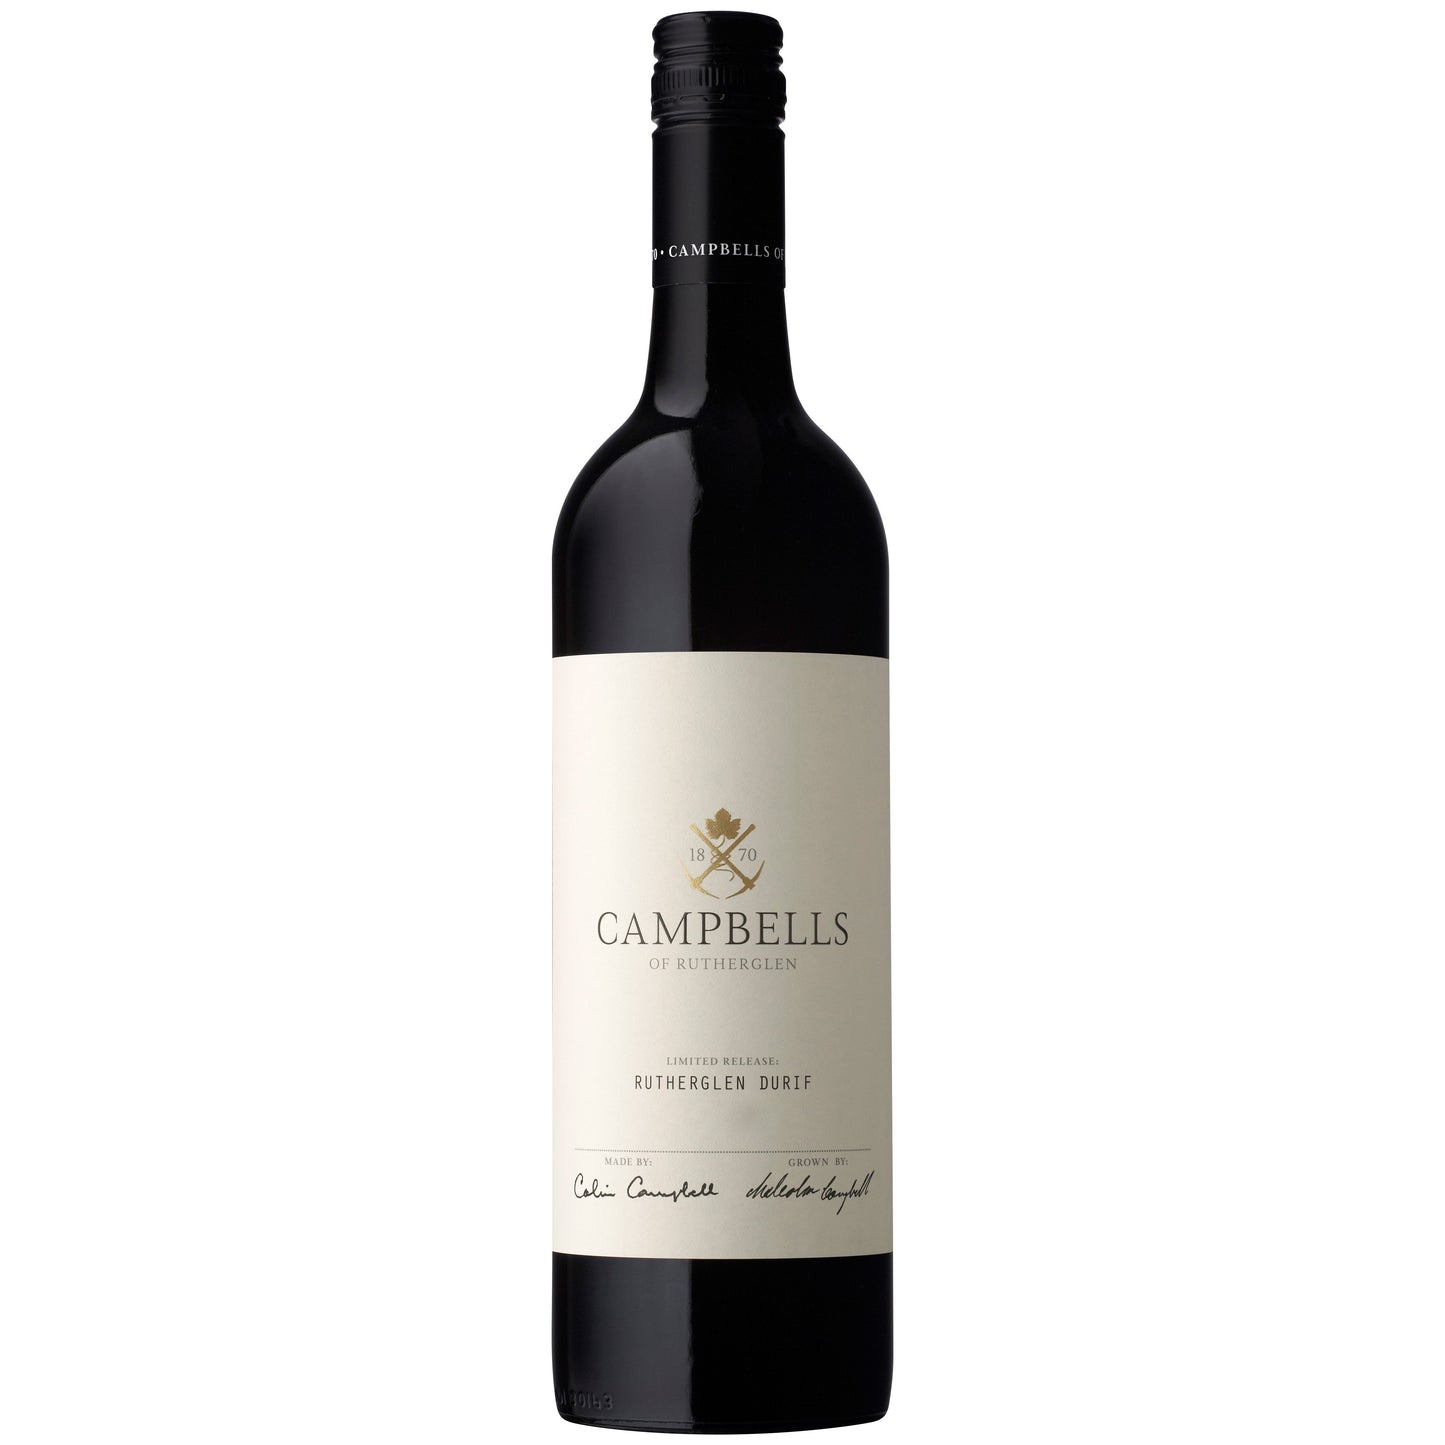 Campbells Limited Release Rutherglen Durif